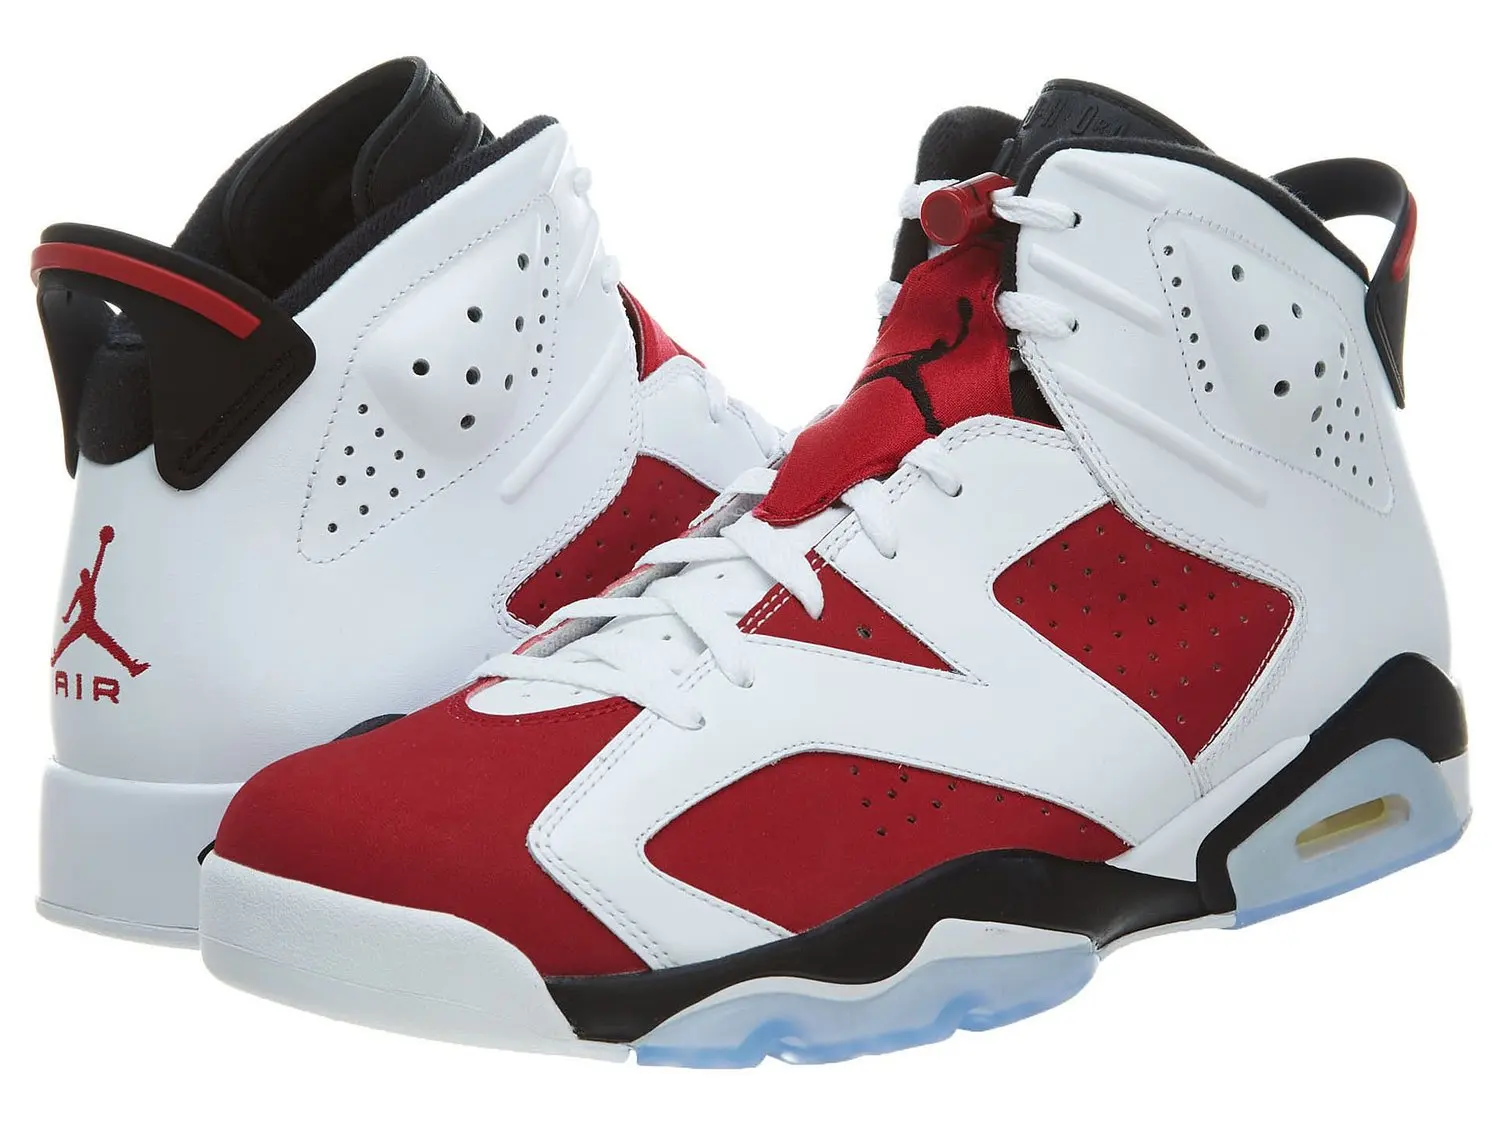 Buy Nike Air Jordan 6 Retro White Carmine Black Size 12 Basketball Shoes 160 In Cheap Price On Alibaba Com